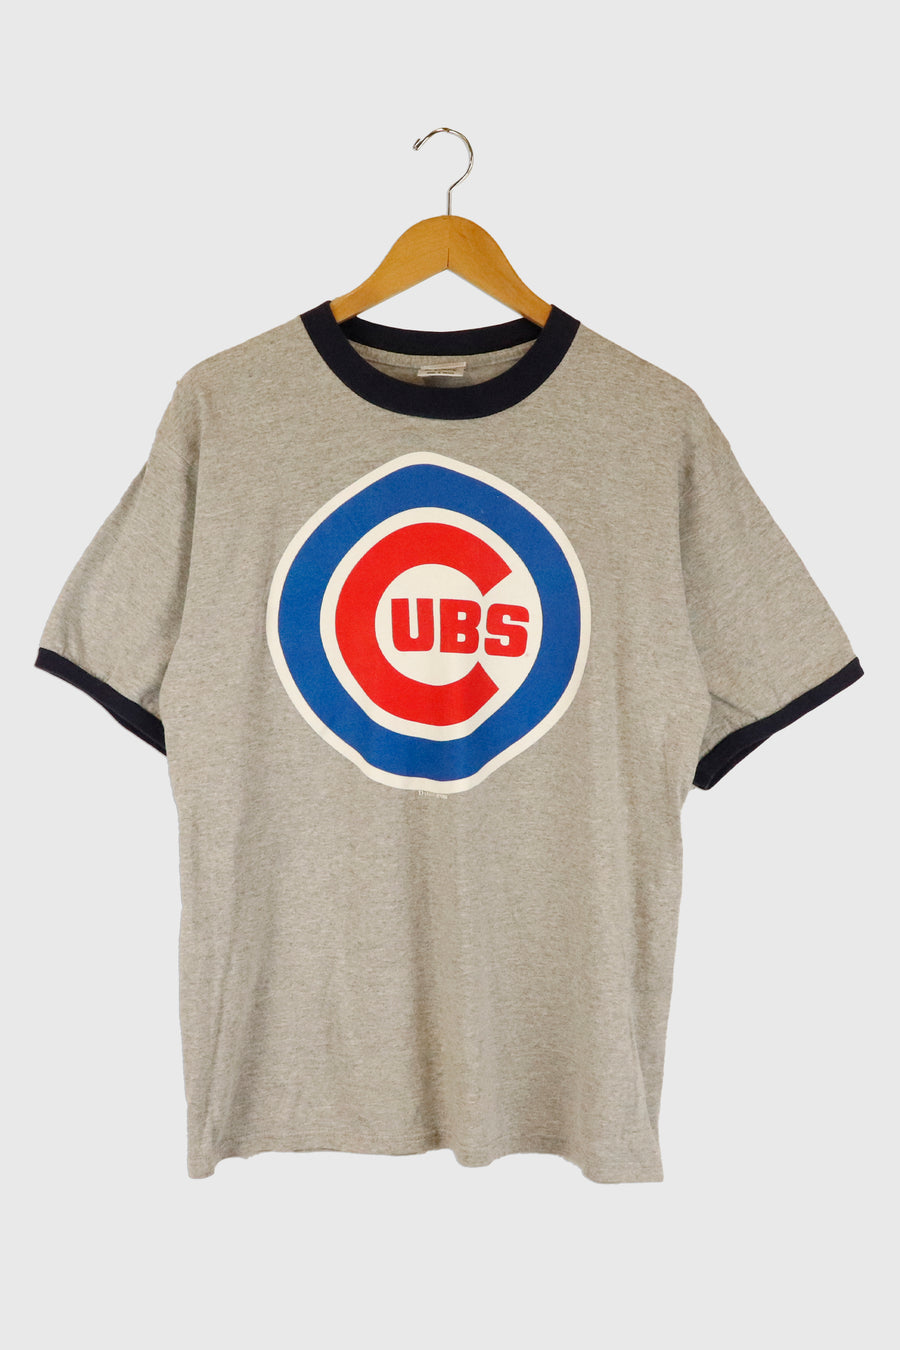 Vintage 2004 MLB Chicago Cubs Colored Logo Graphic T Shirt Sz L